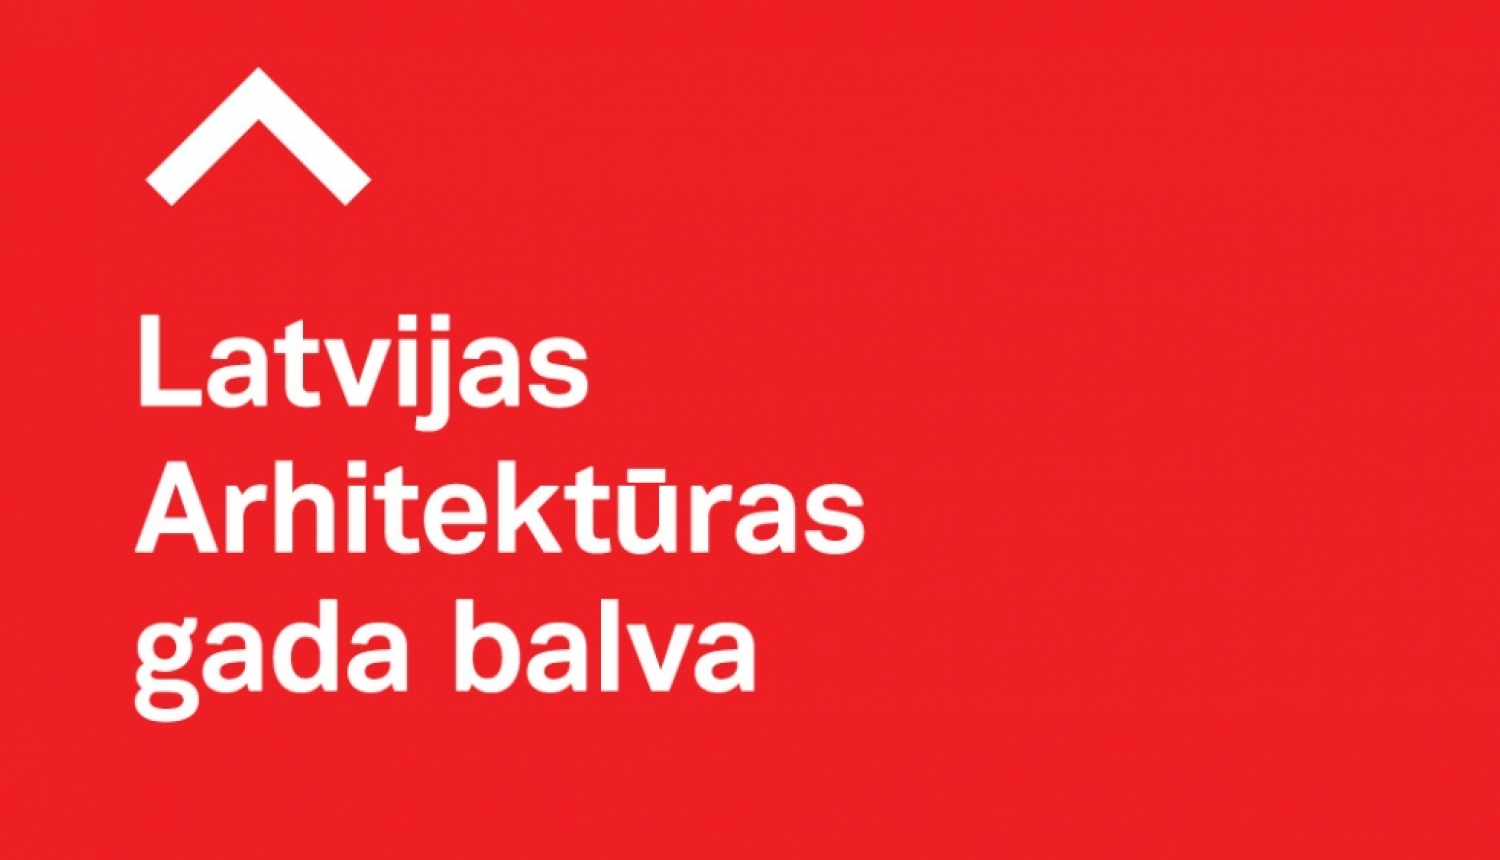 Latvijas Arhitektūras gada balvas logo